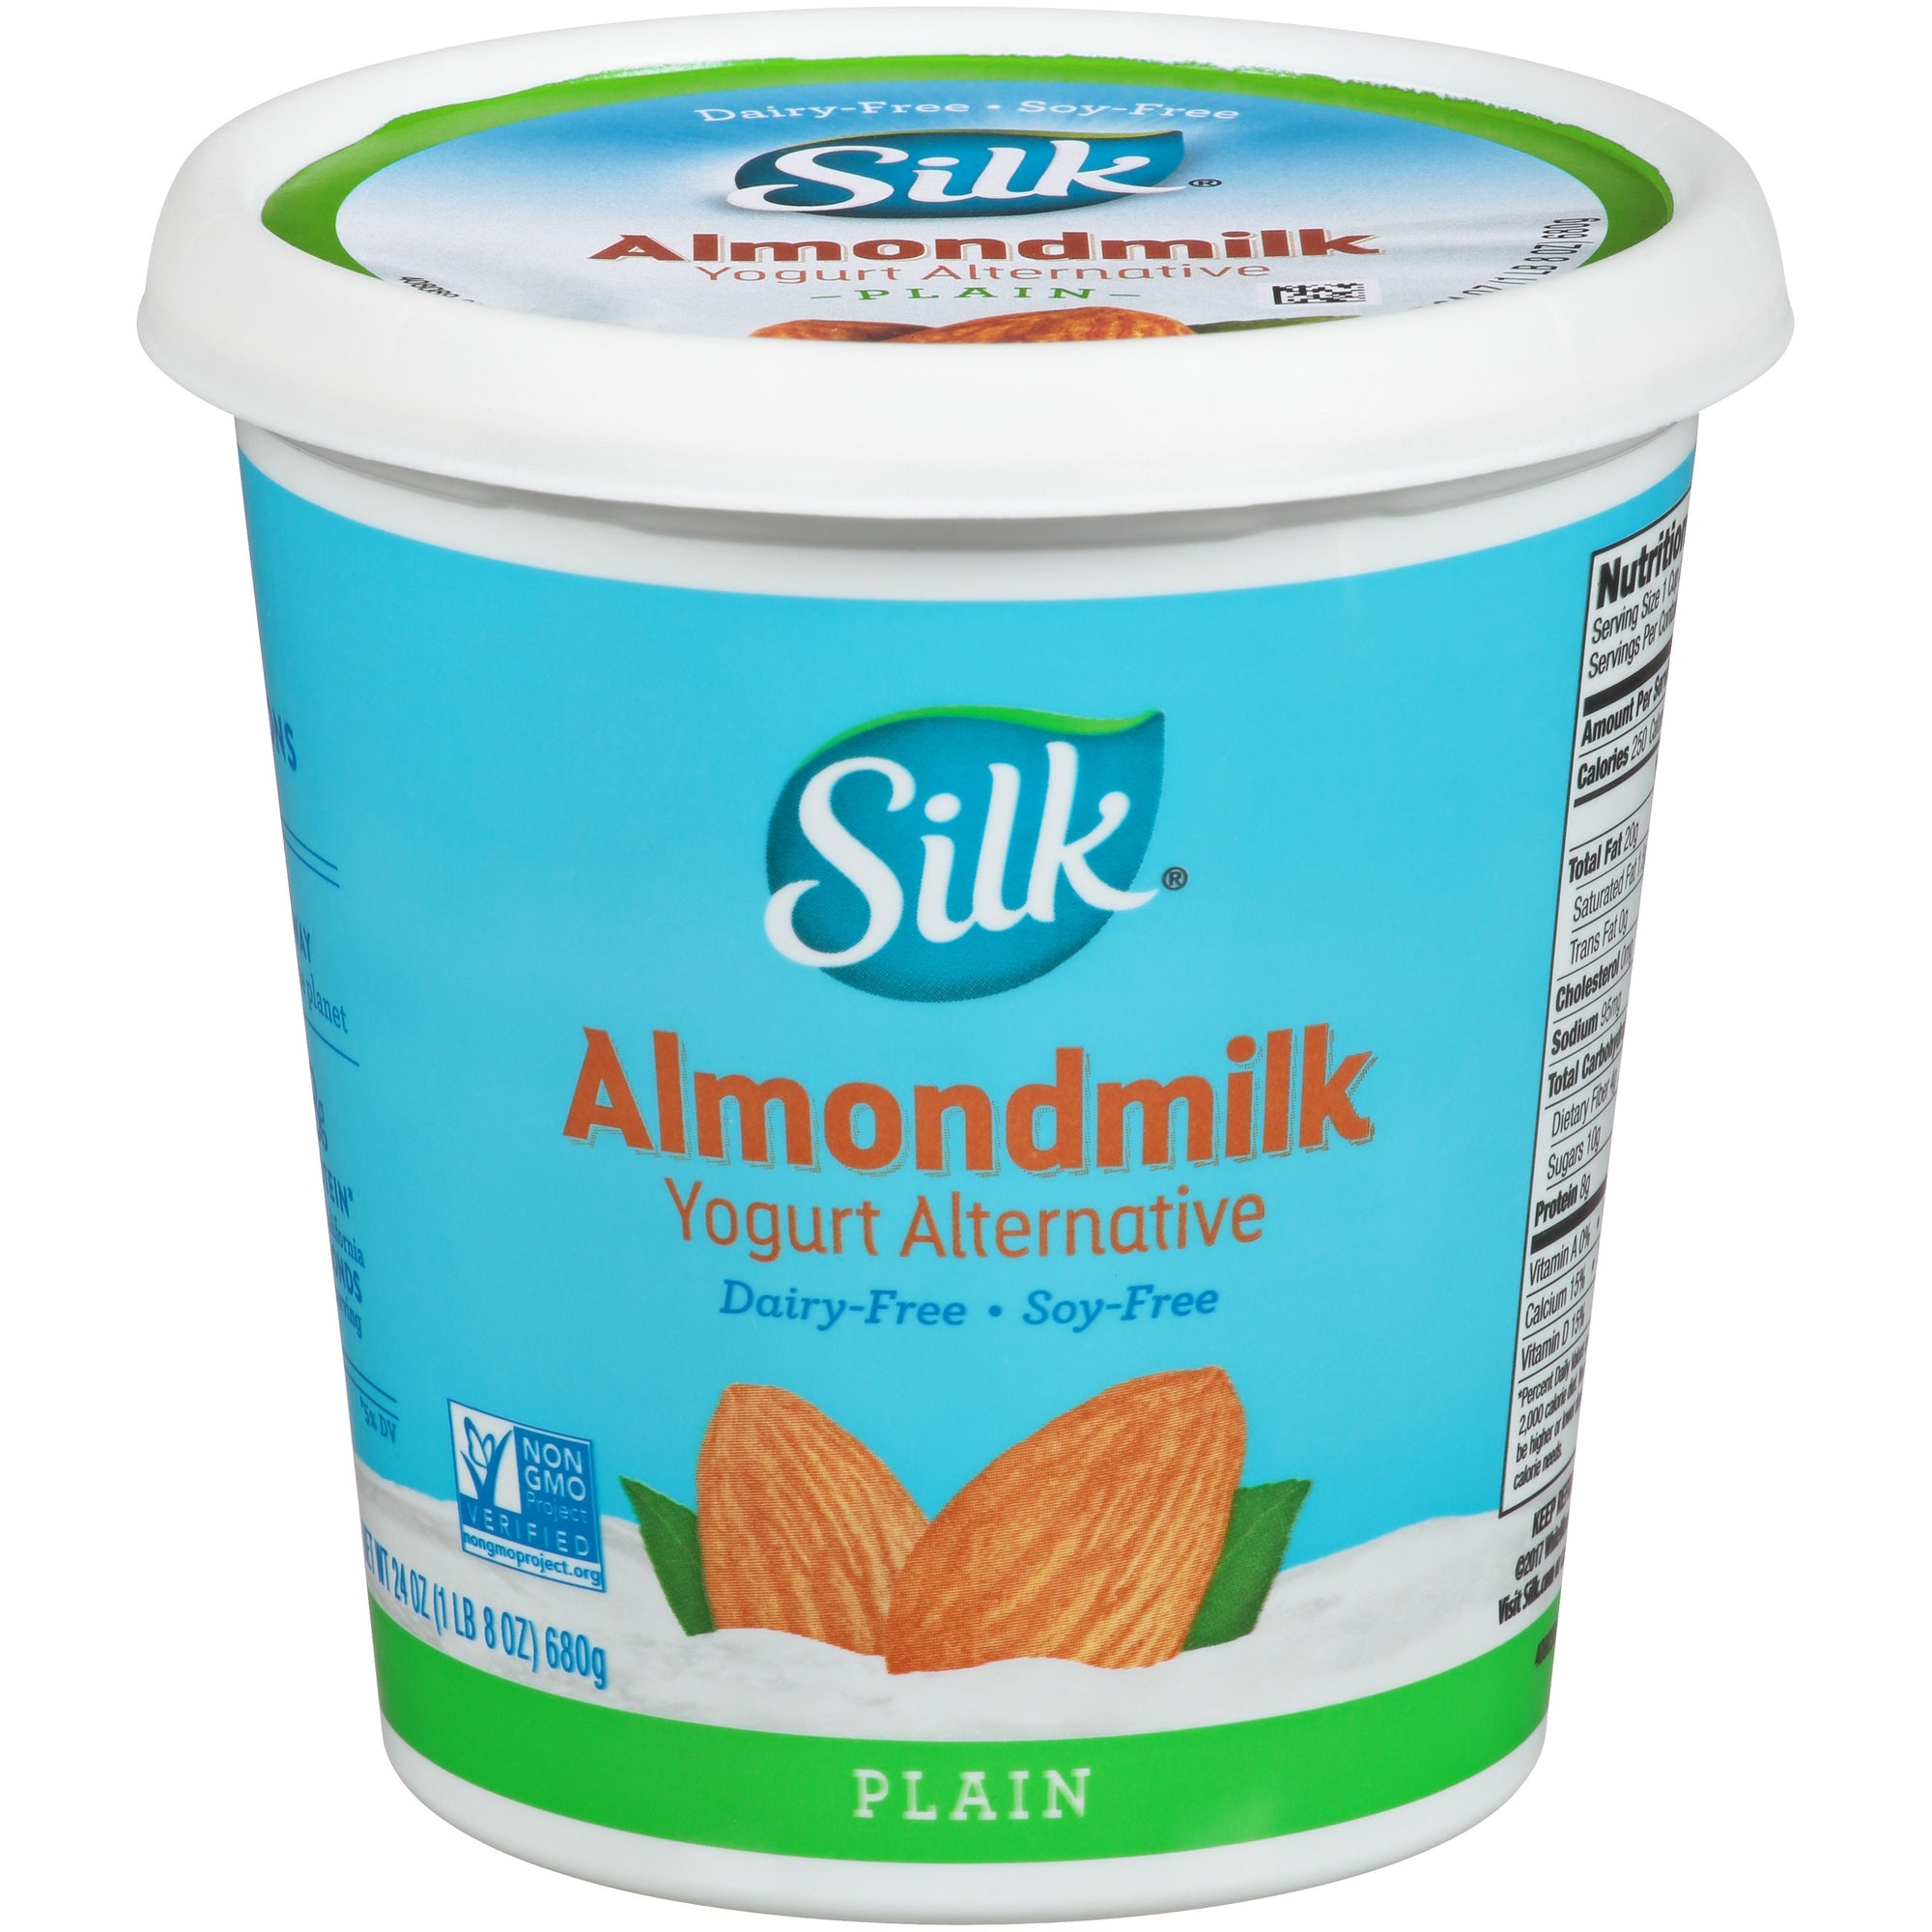 Silk® Almond Milk Dairy-Free Yogurt Alternative, 24 Oz